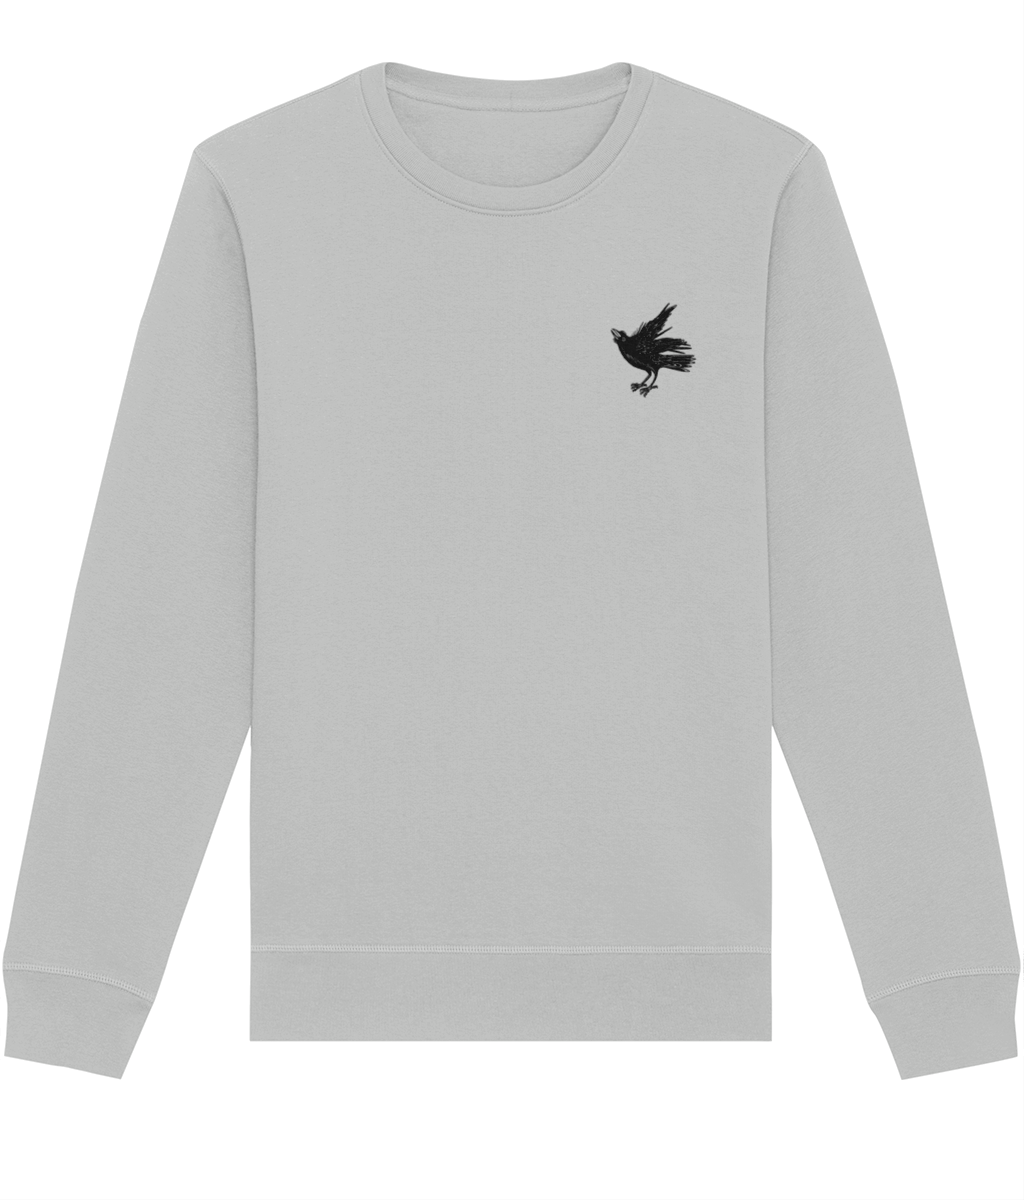 Unisex Sweatshirt - Signature Black Crow